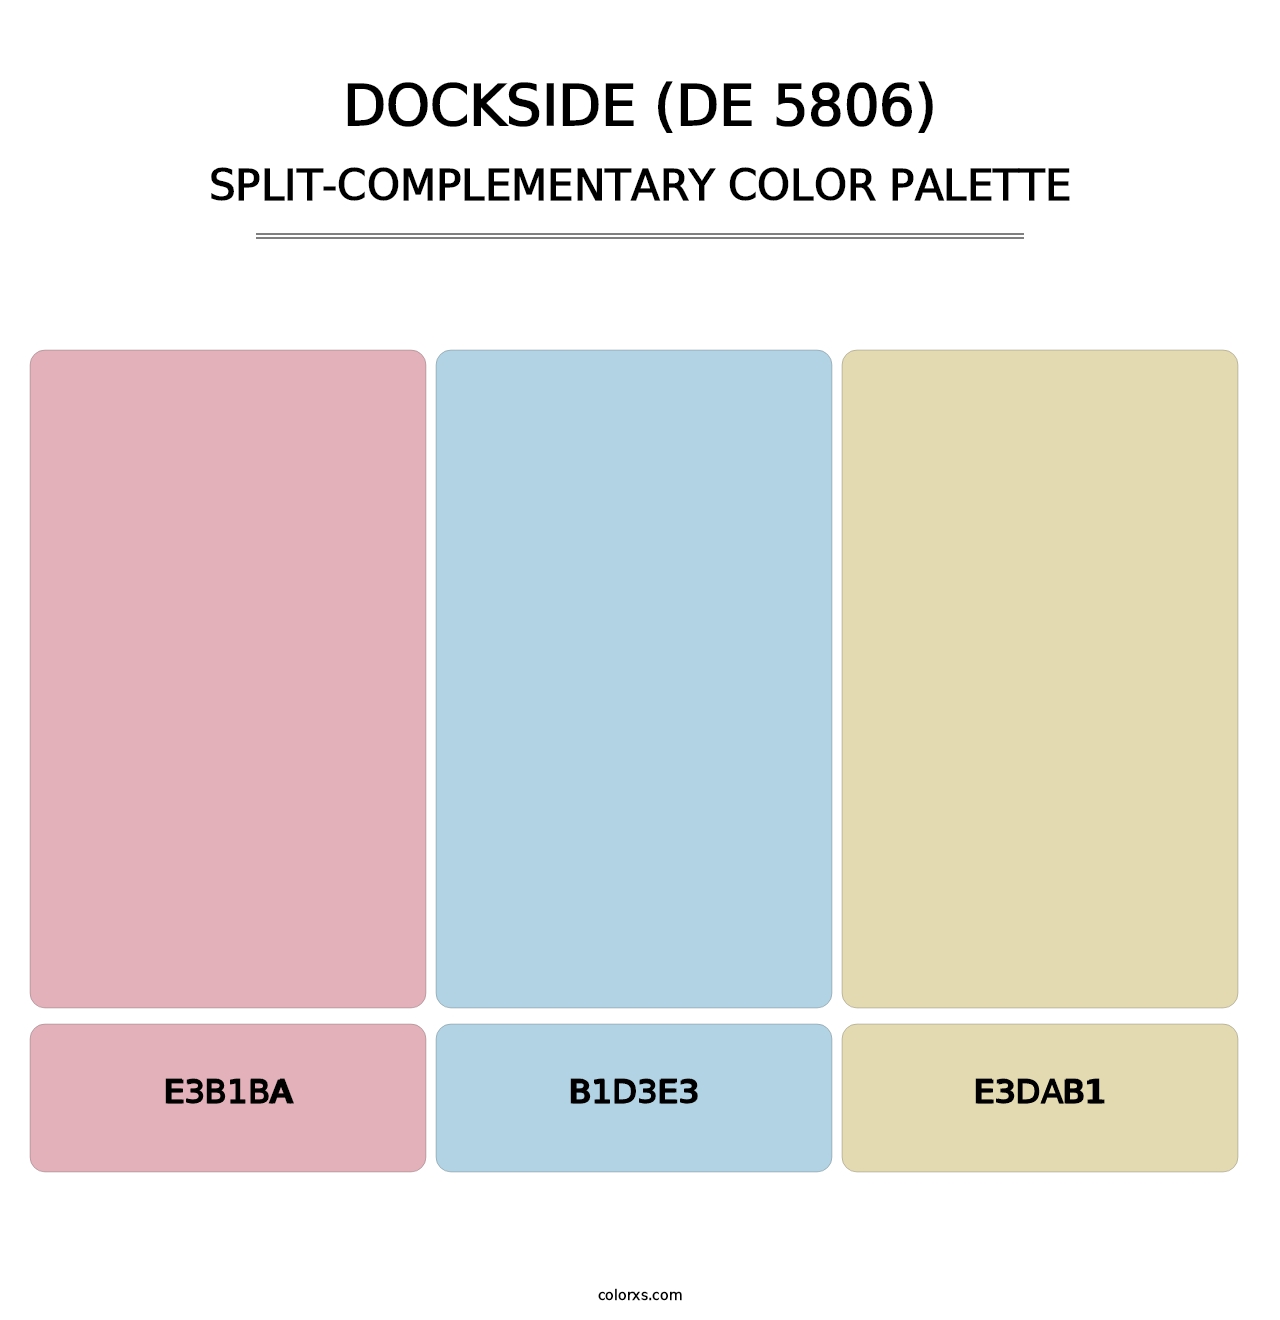 Dockside (DE 5806) - Split-Complementary Color Palette